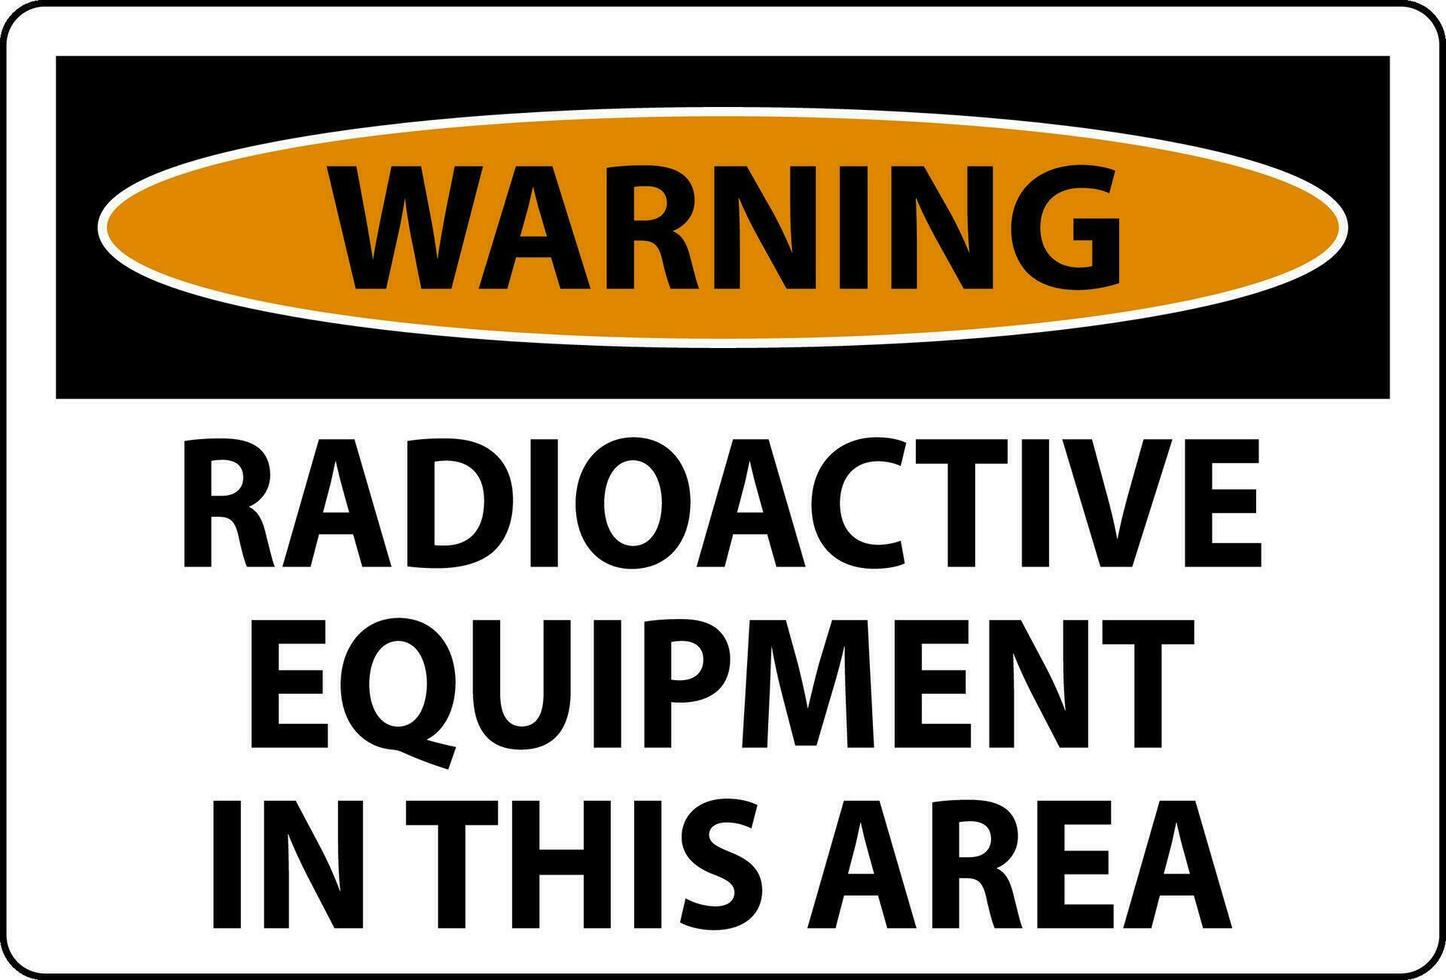 advertencia firmar precaución radioactivo equipo en esta zona vector